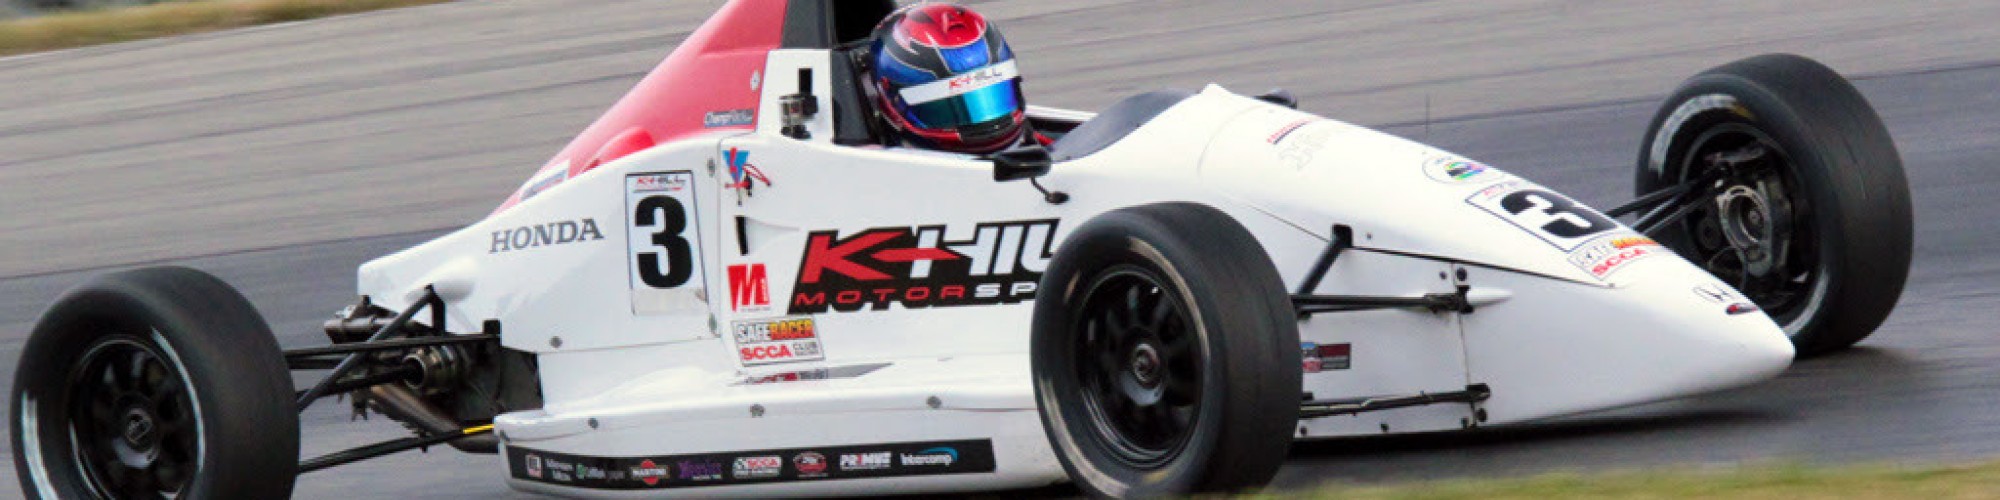 K-Hill Motorsports cover image